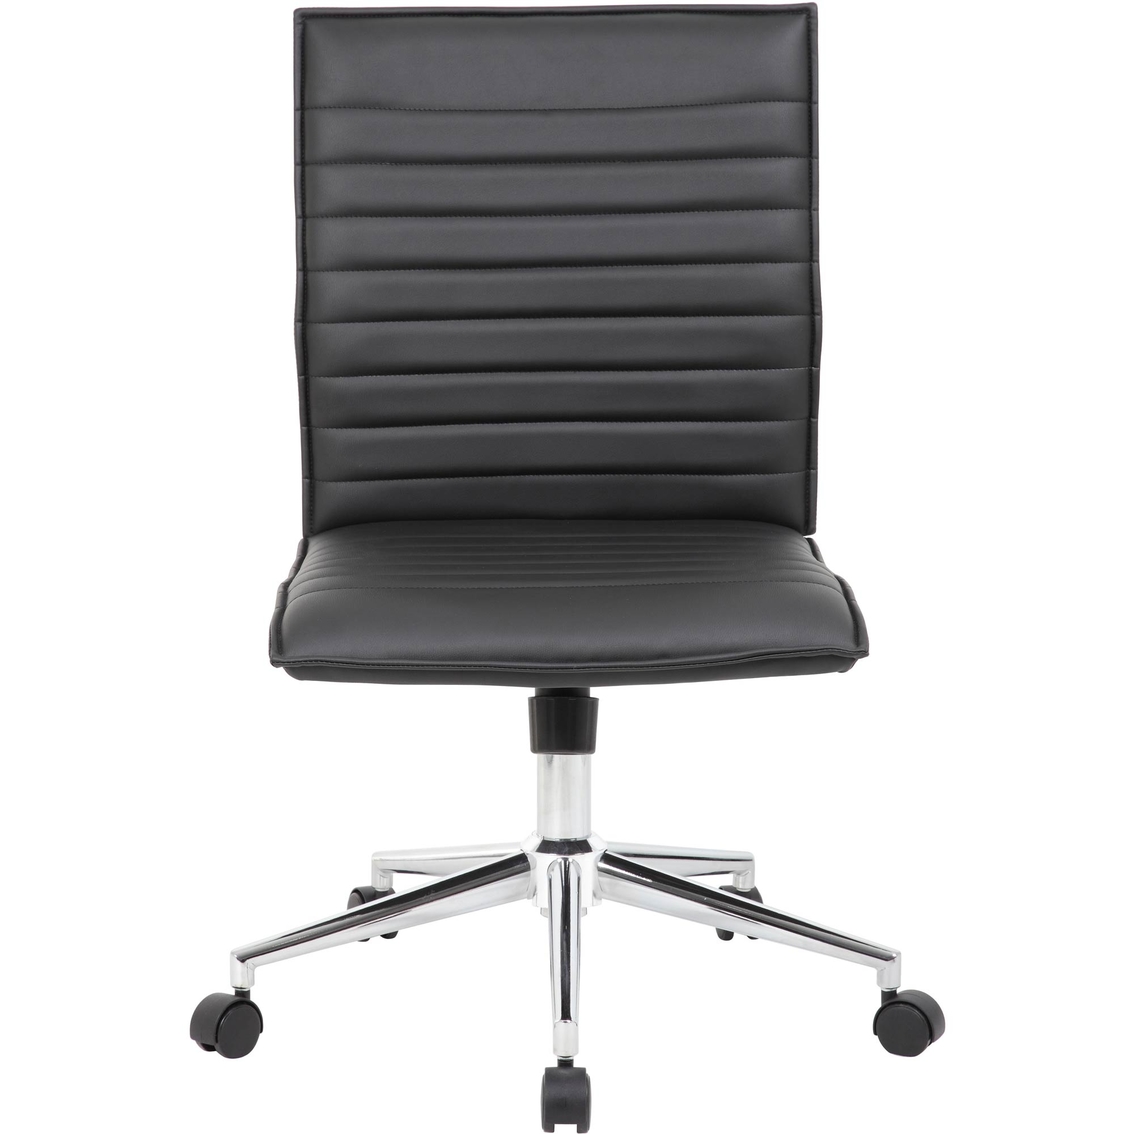 Presidential Seating Swivel Task Chair - Image 2 of 6